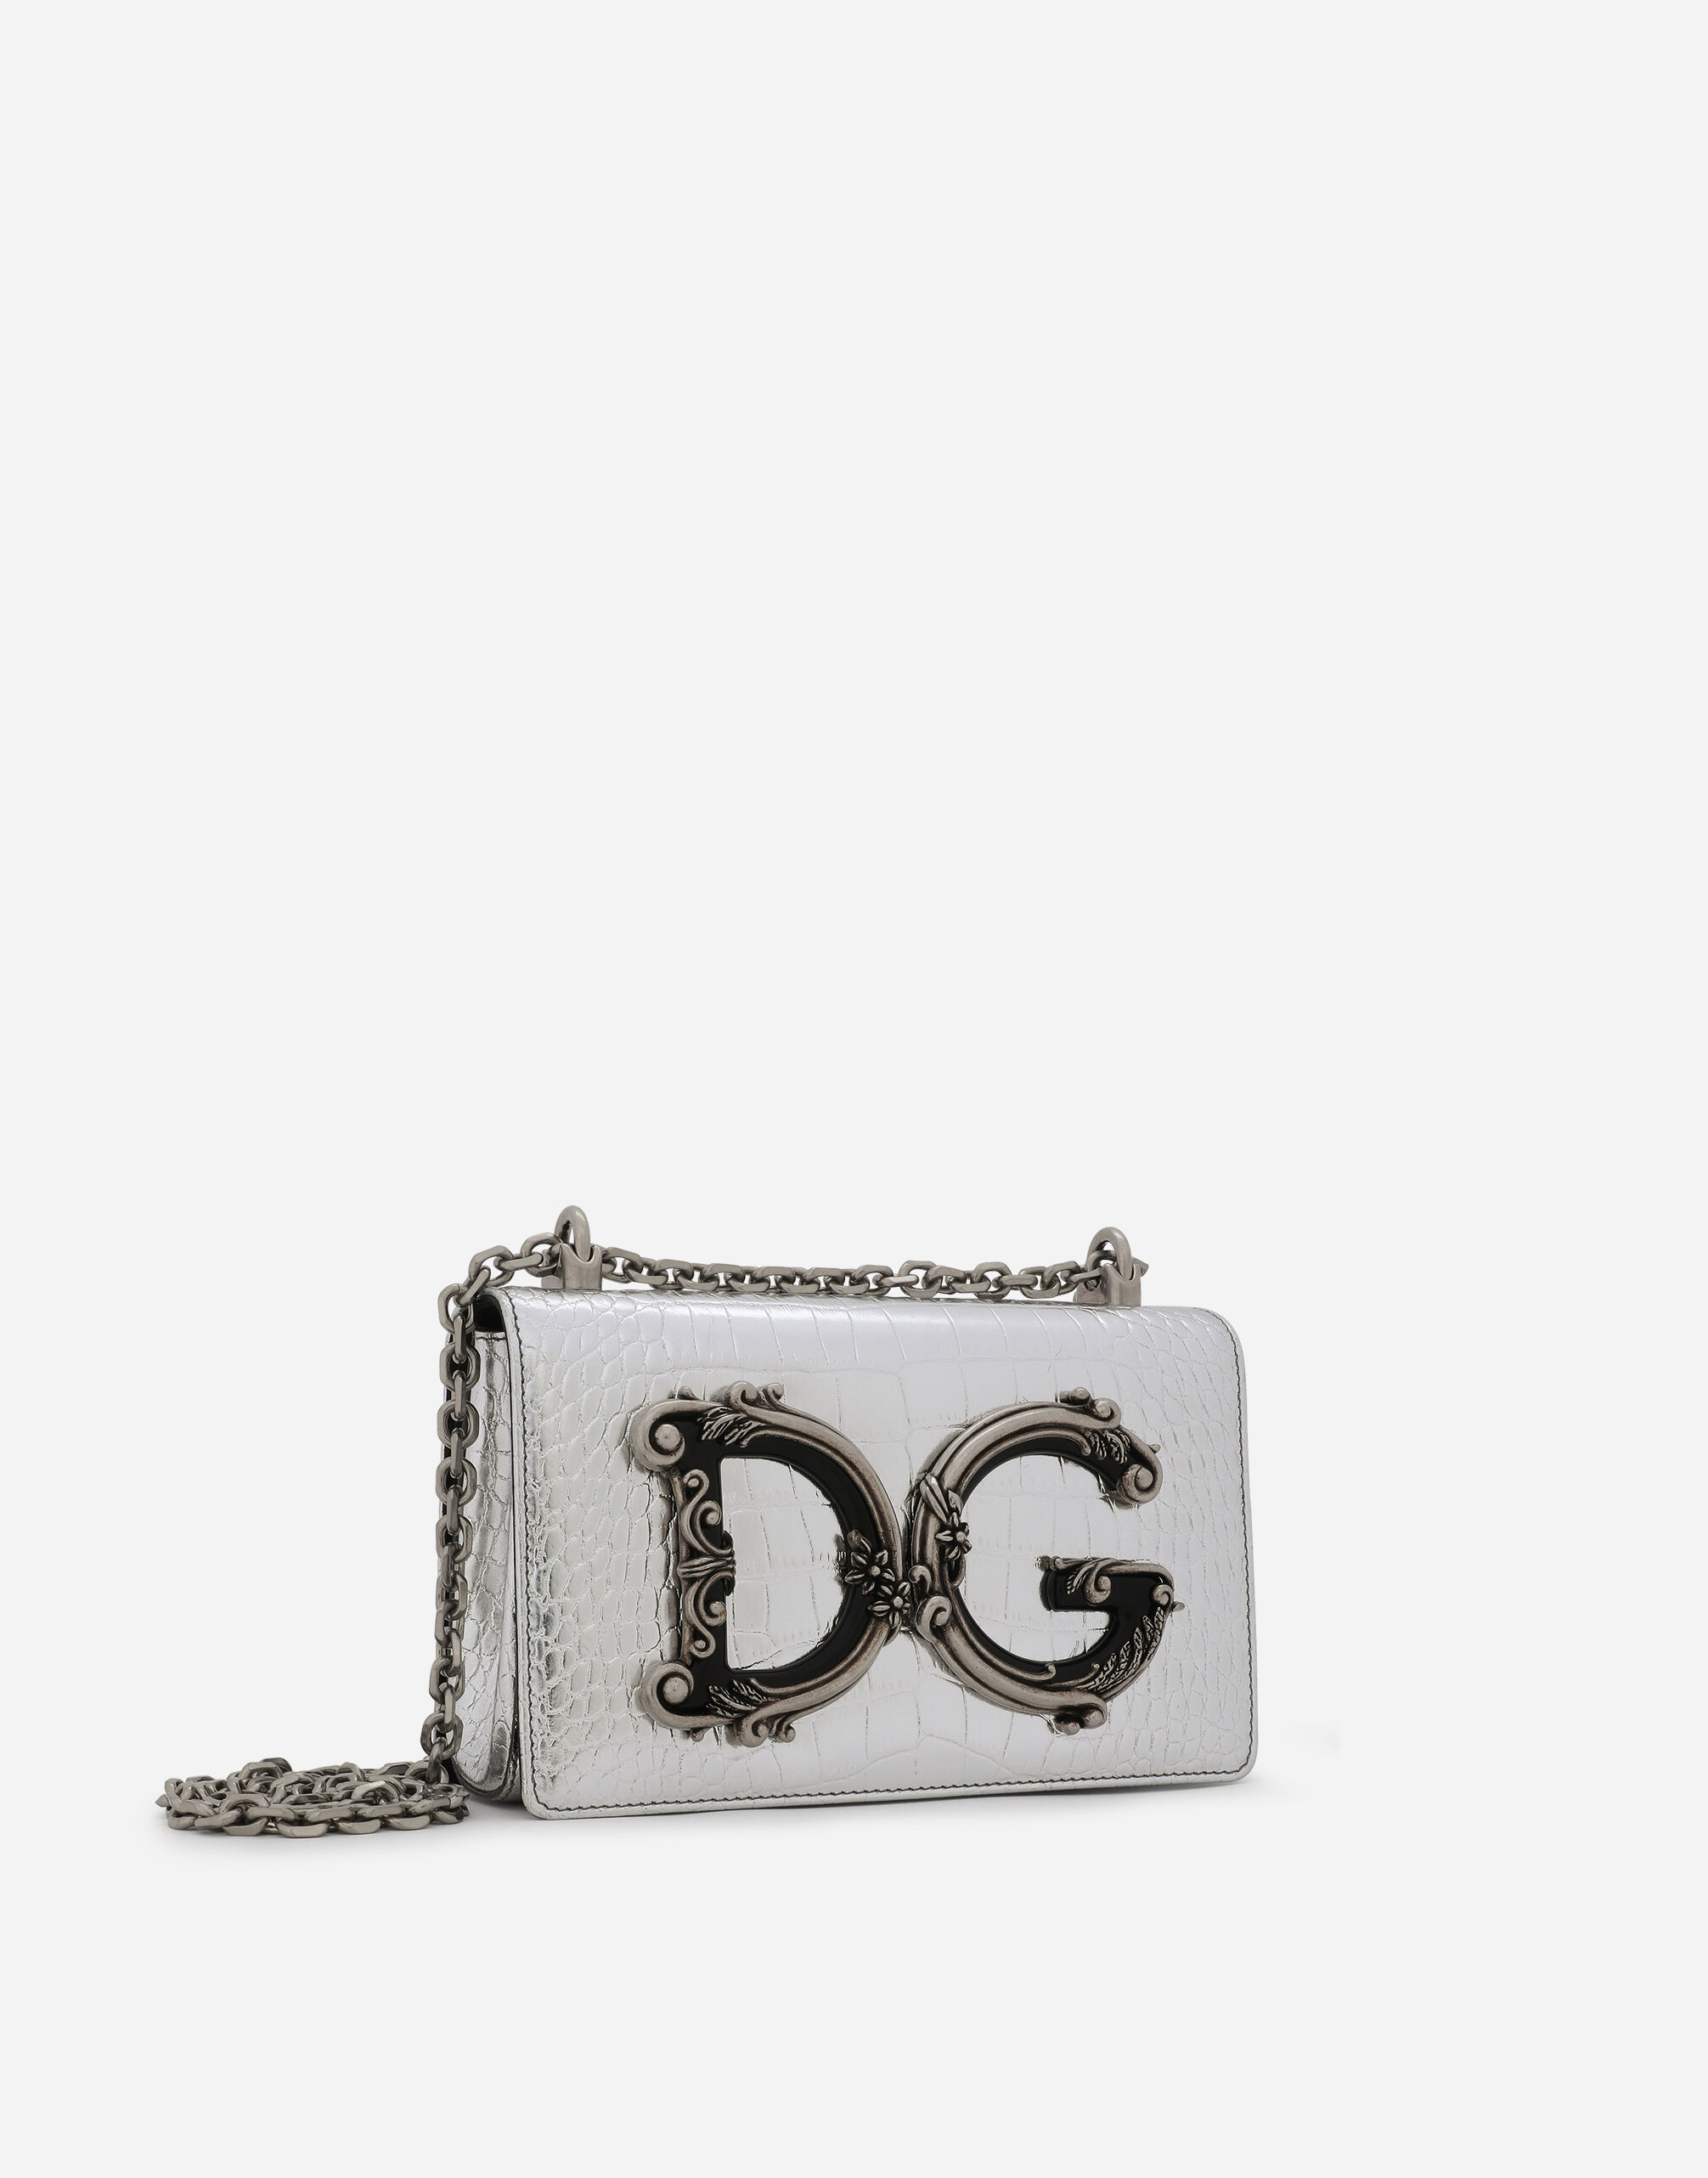 Foiled crocodile-print calfskin DG Girls bag